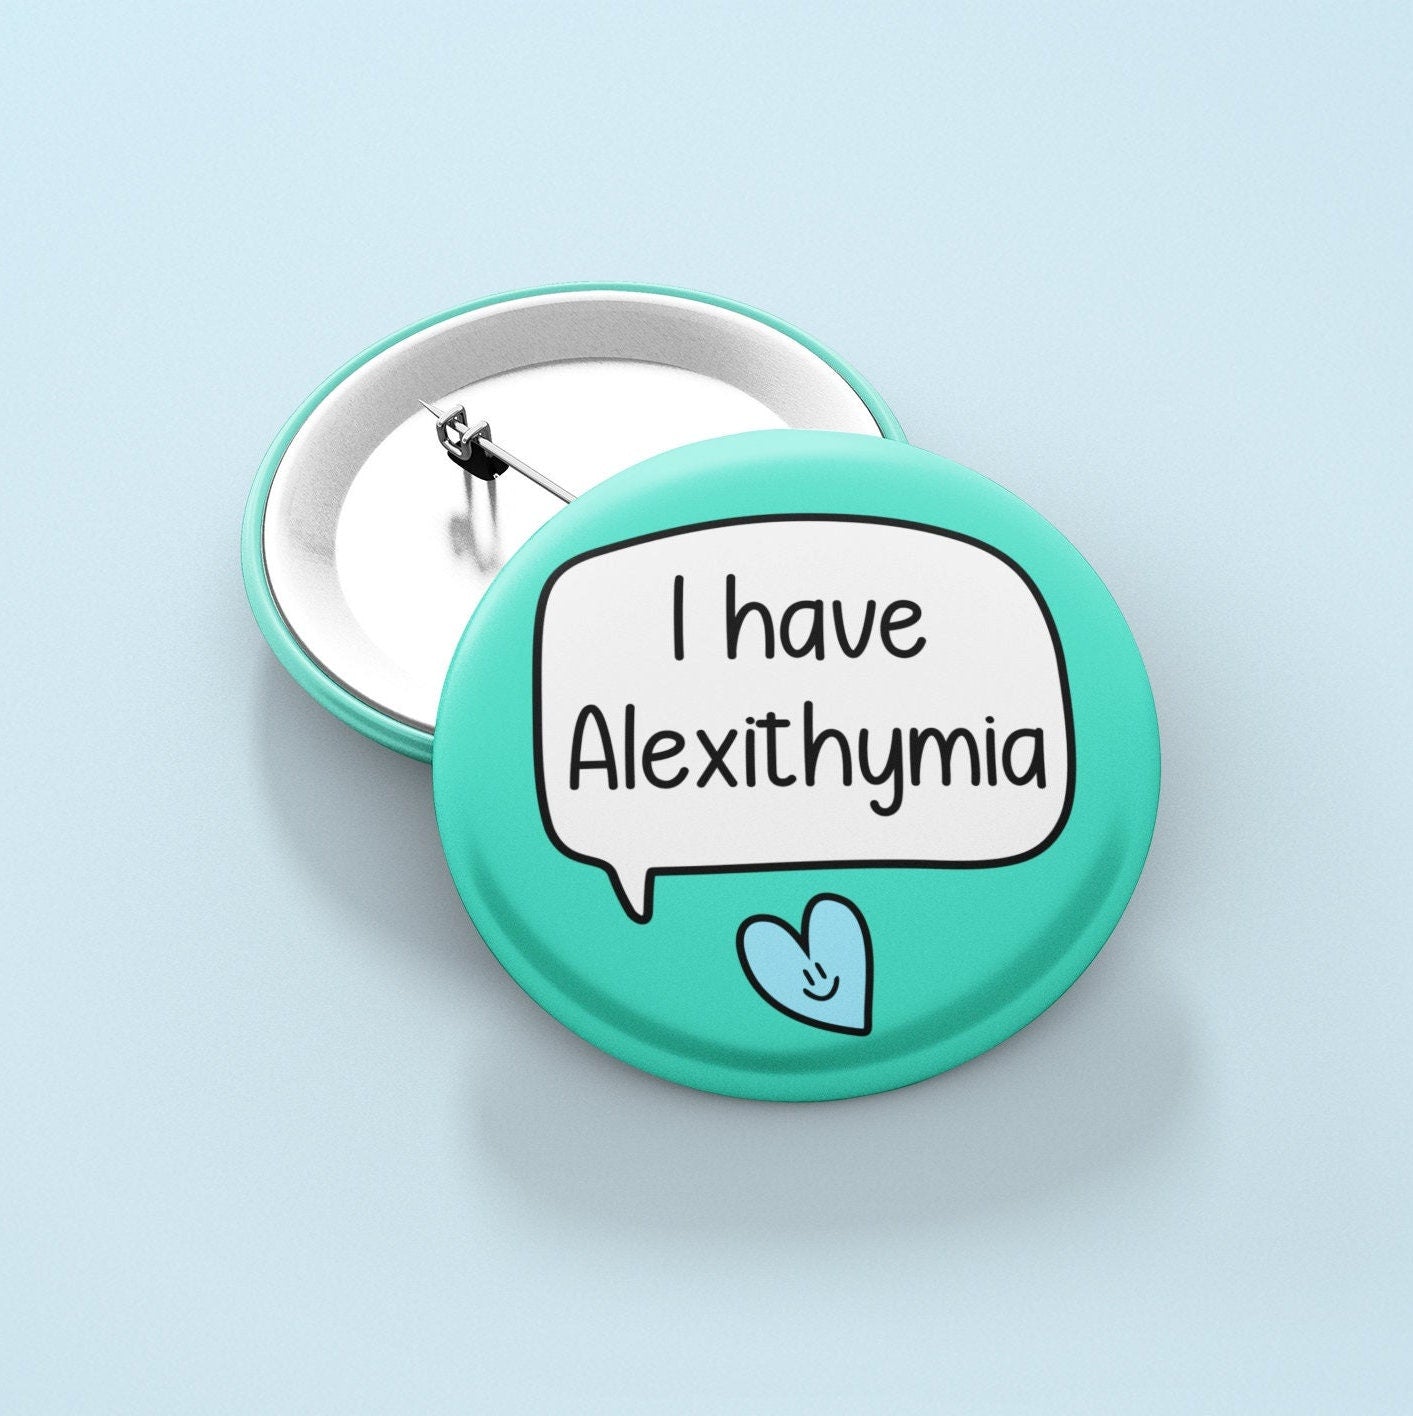 I have Alexithymia Badge Pin | Alexithymia Awareness